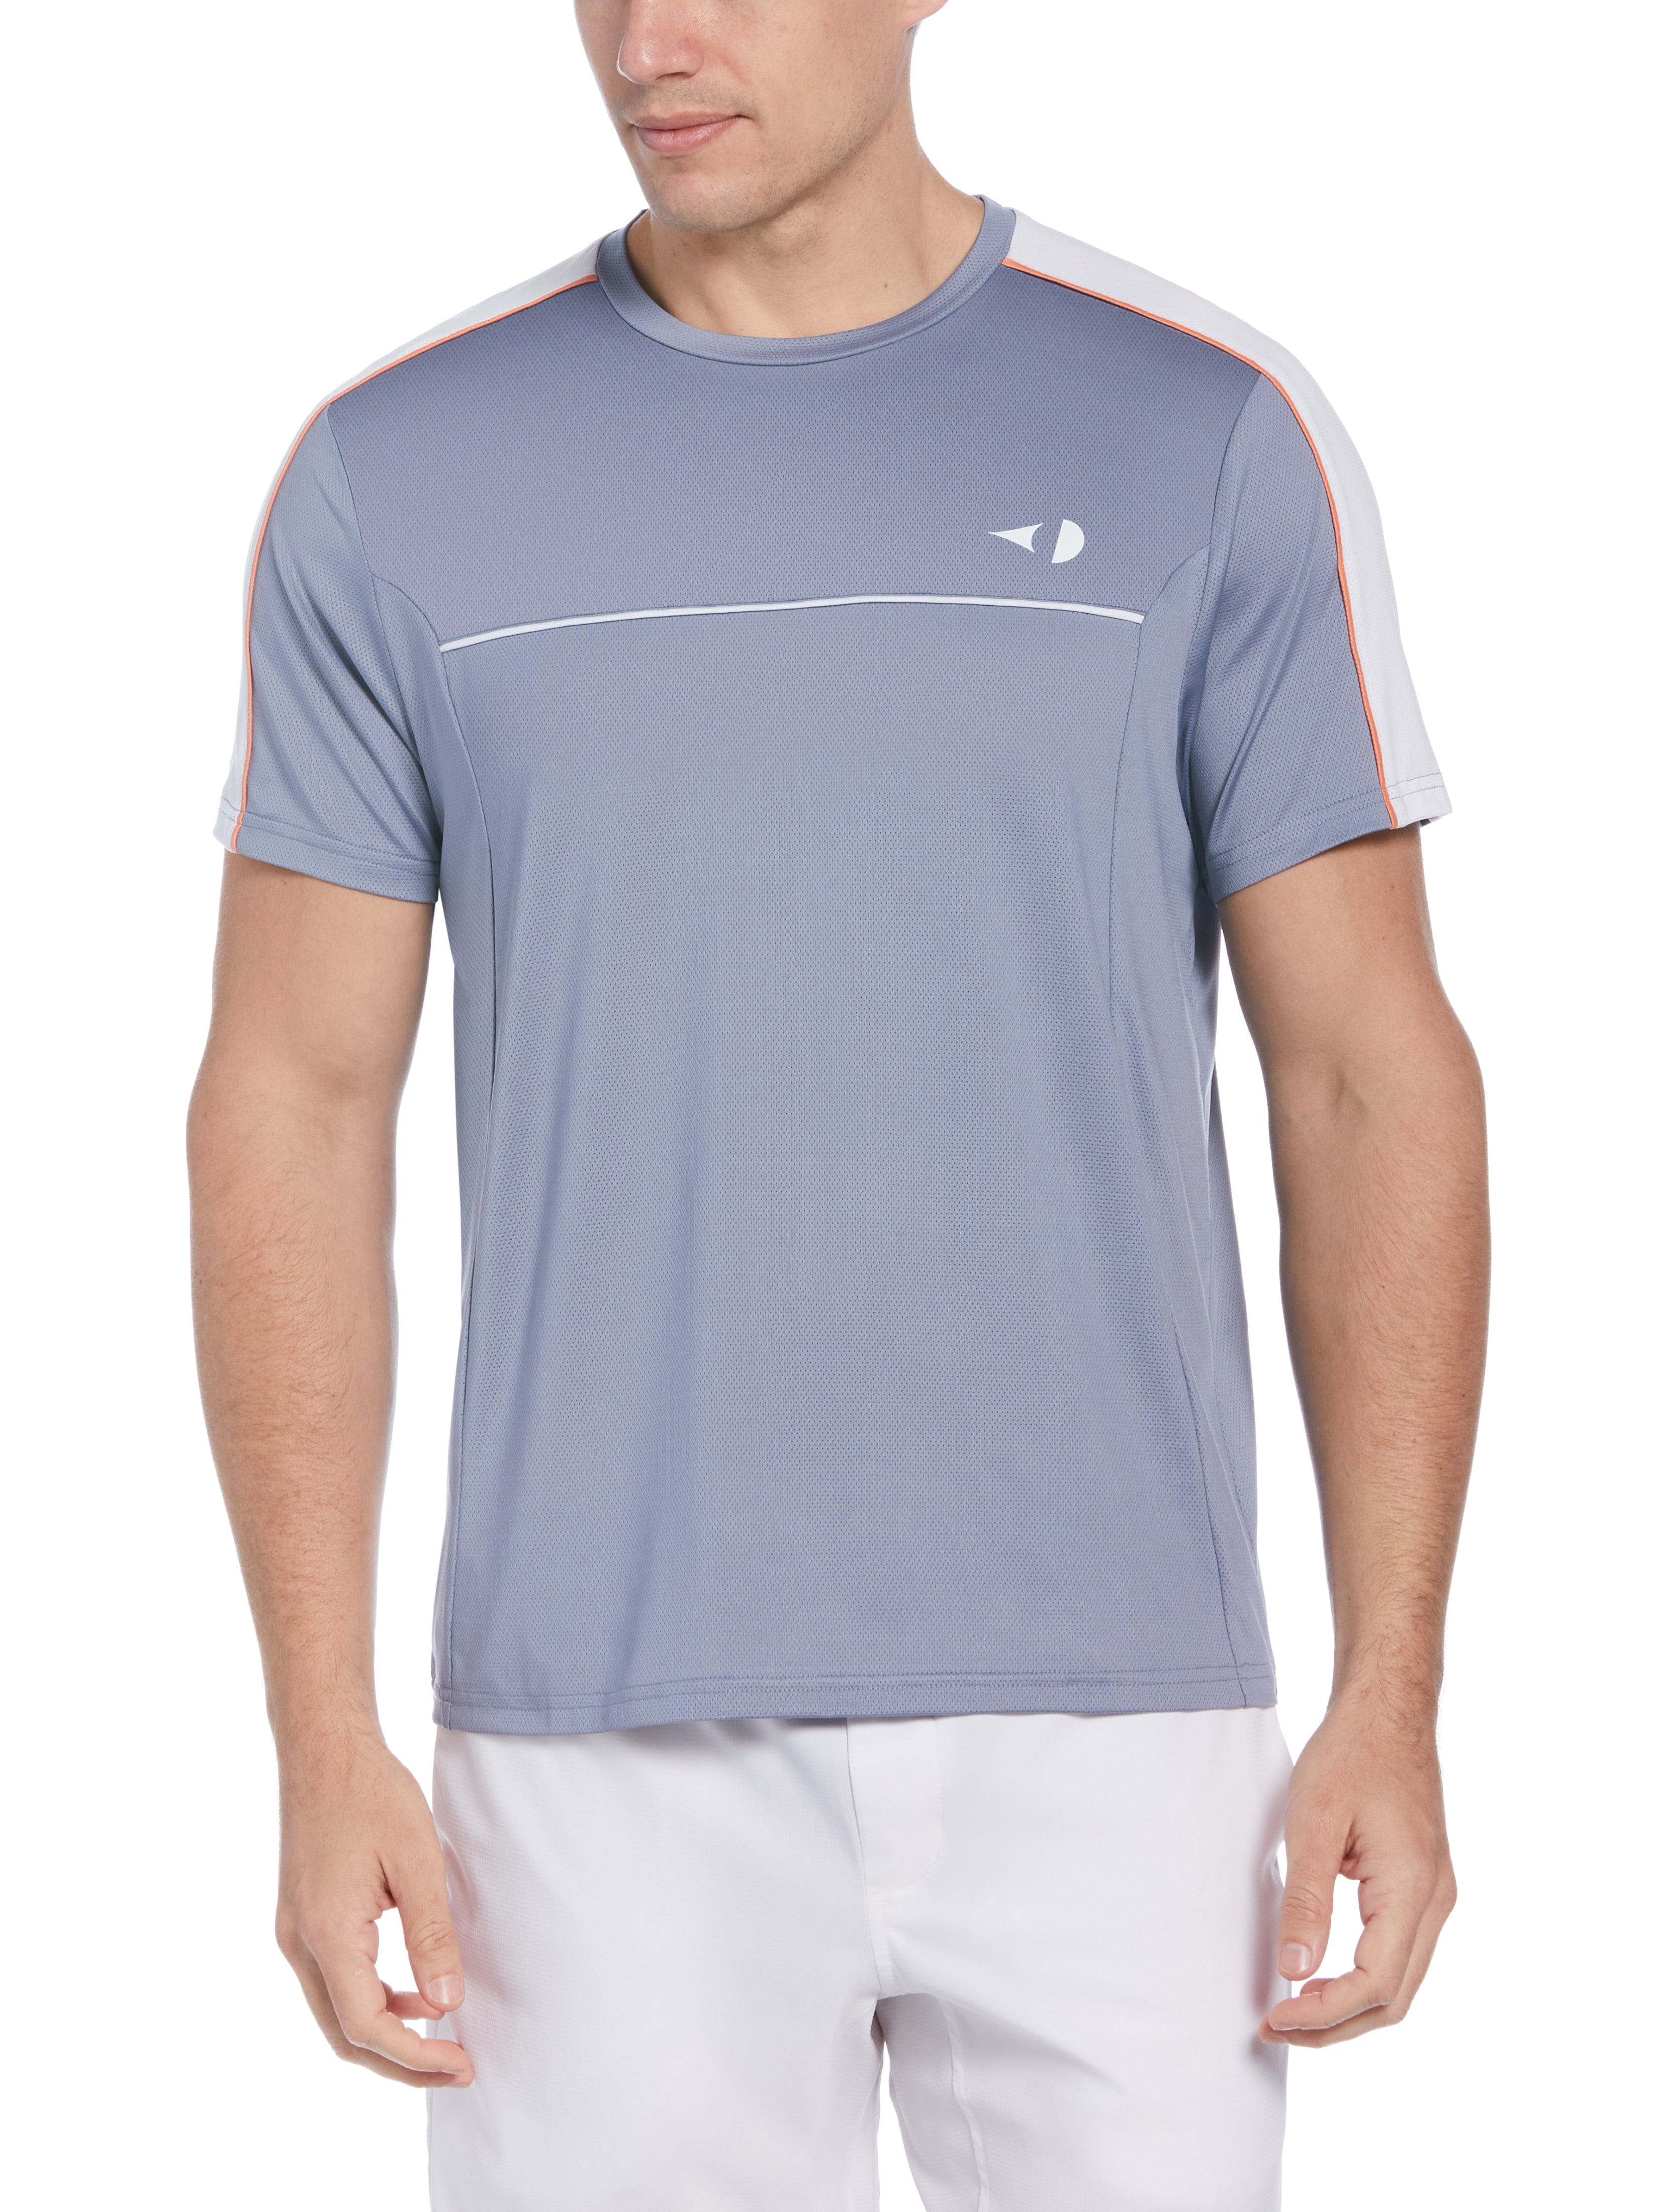 Grand Slam Mens Color Block Crew Neck Tennis Shirt w/ Piping, Size Small, Flint Stone Gray, Polyester/Spandex | Golf Apparel Shop